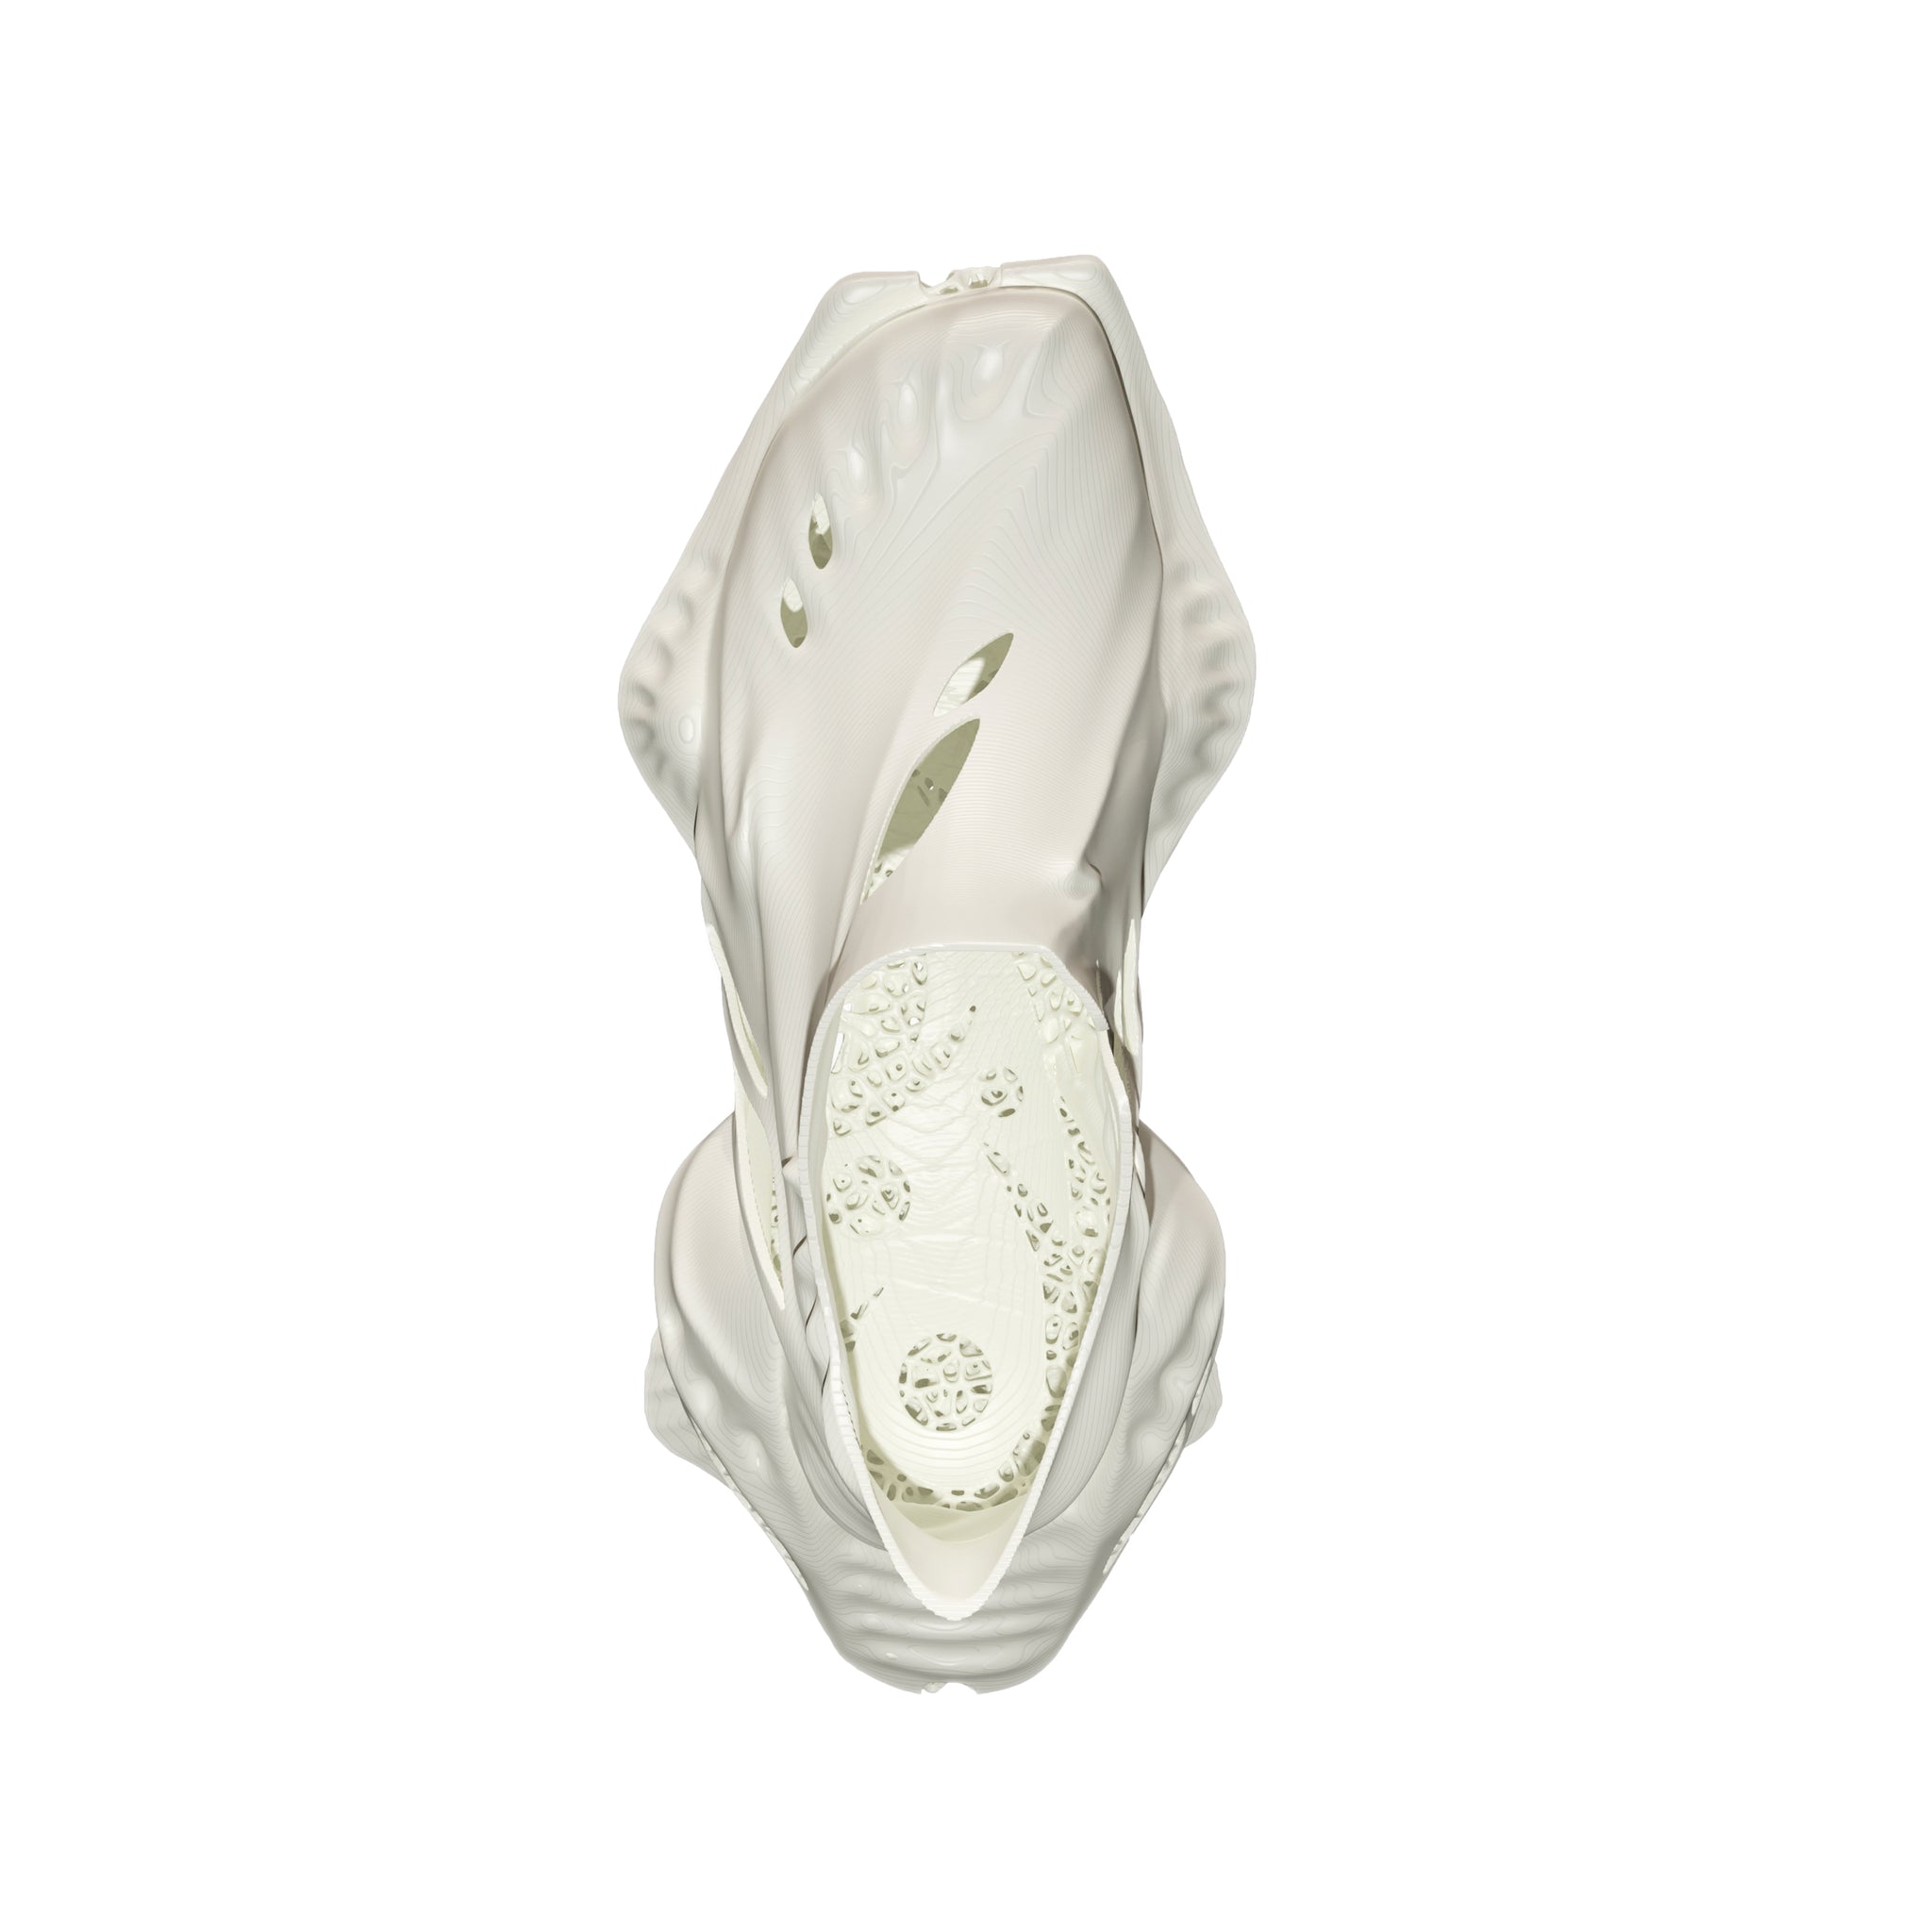 ALIENANT X DERO ASSORTMENT Hyer S White 3D Printed Shoes